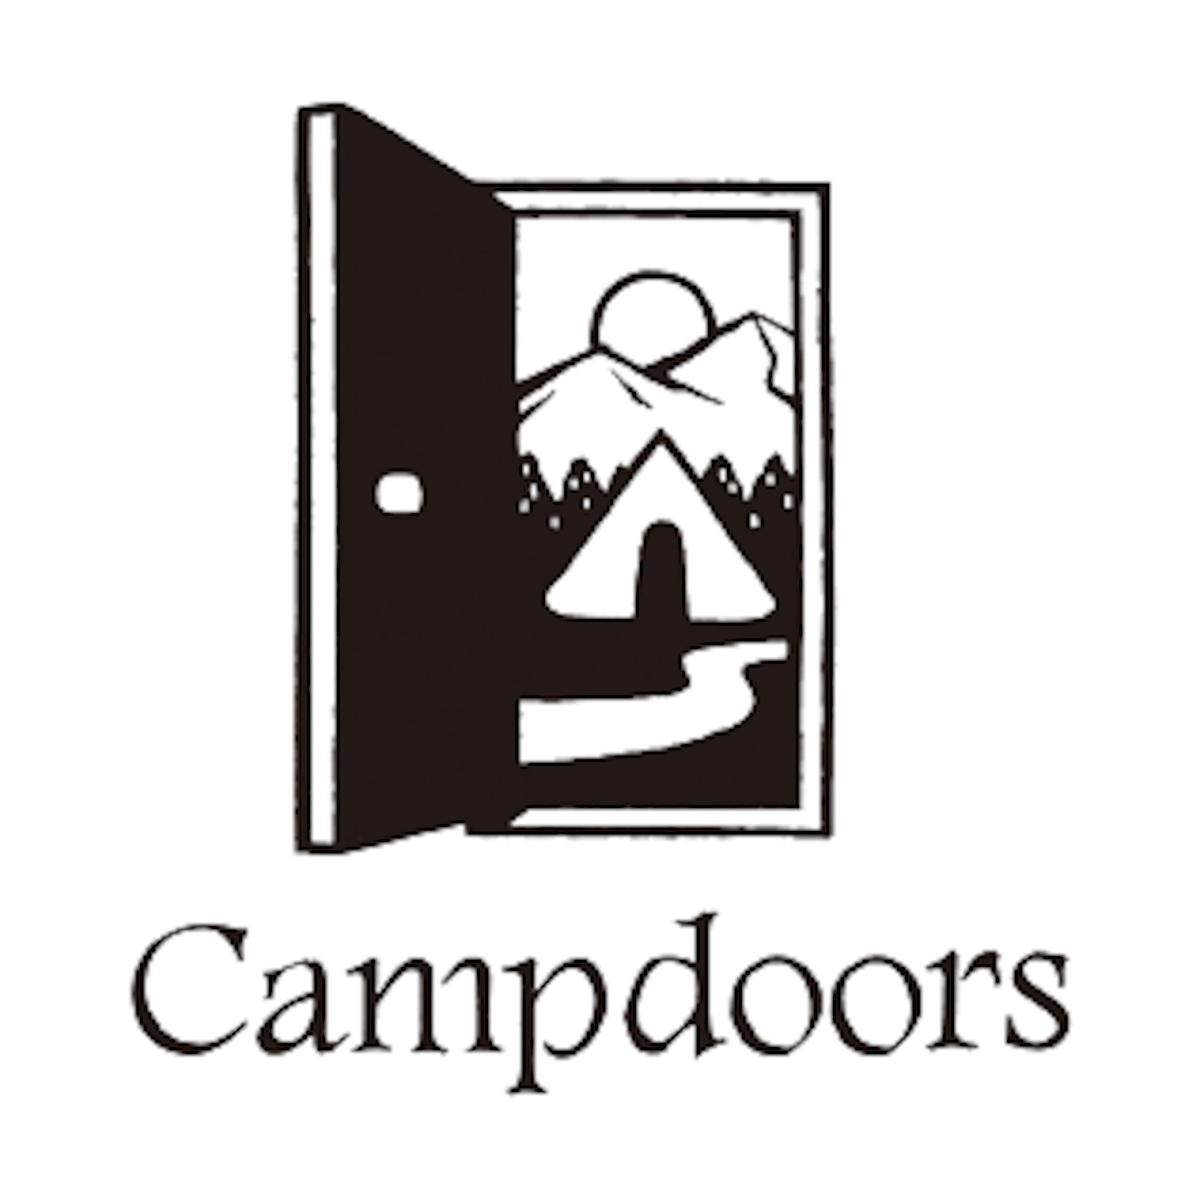 Campdoors Online Shop